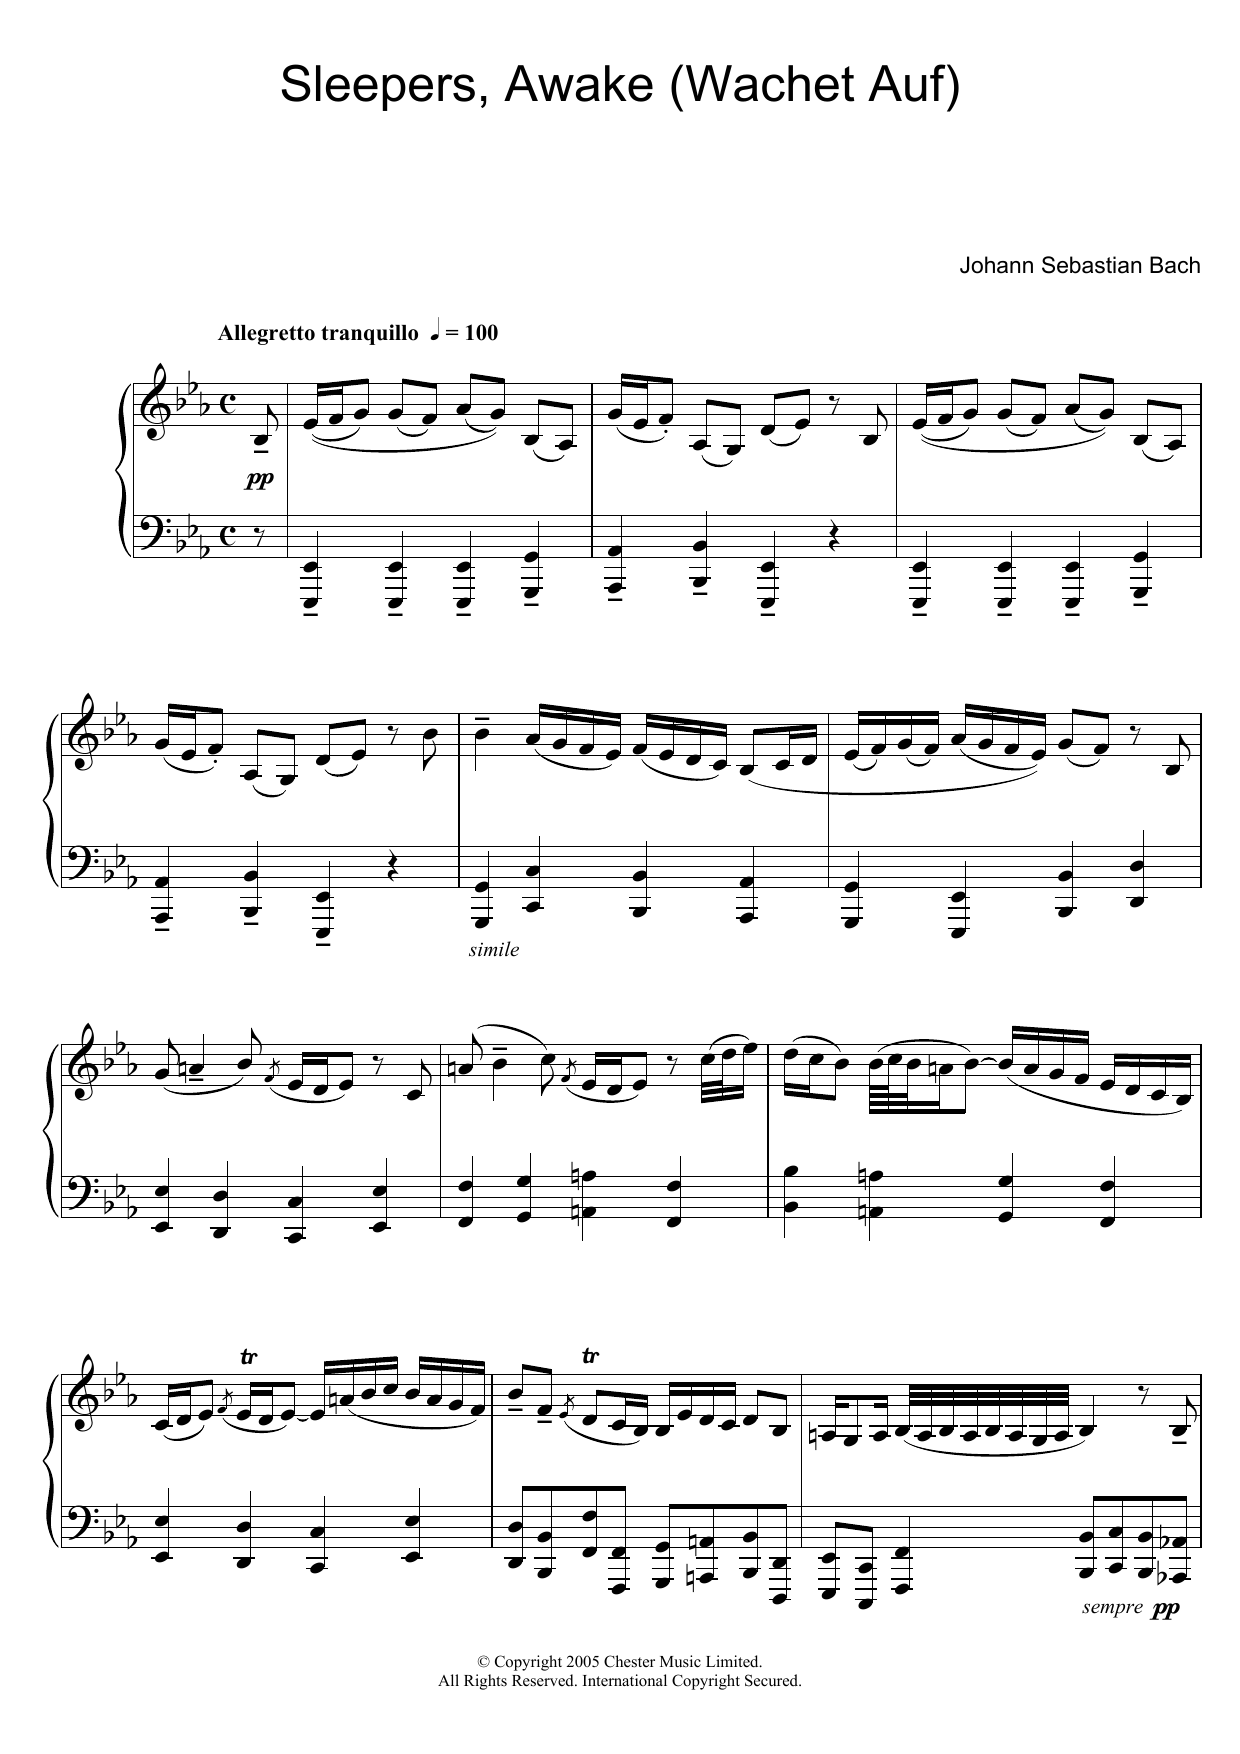 Johann Sebastian Bach Sleepers, Awake (Wachet Auf) Sheet Music Notes & Chords for Violin - Download or Print PDF